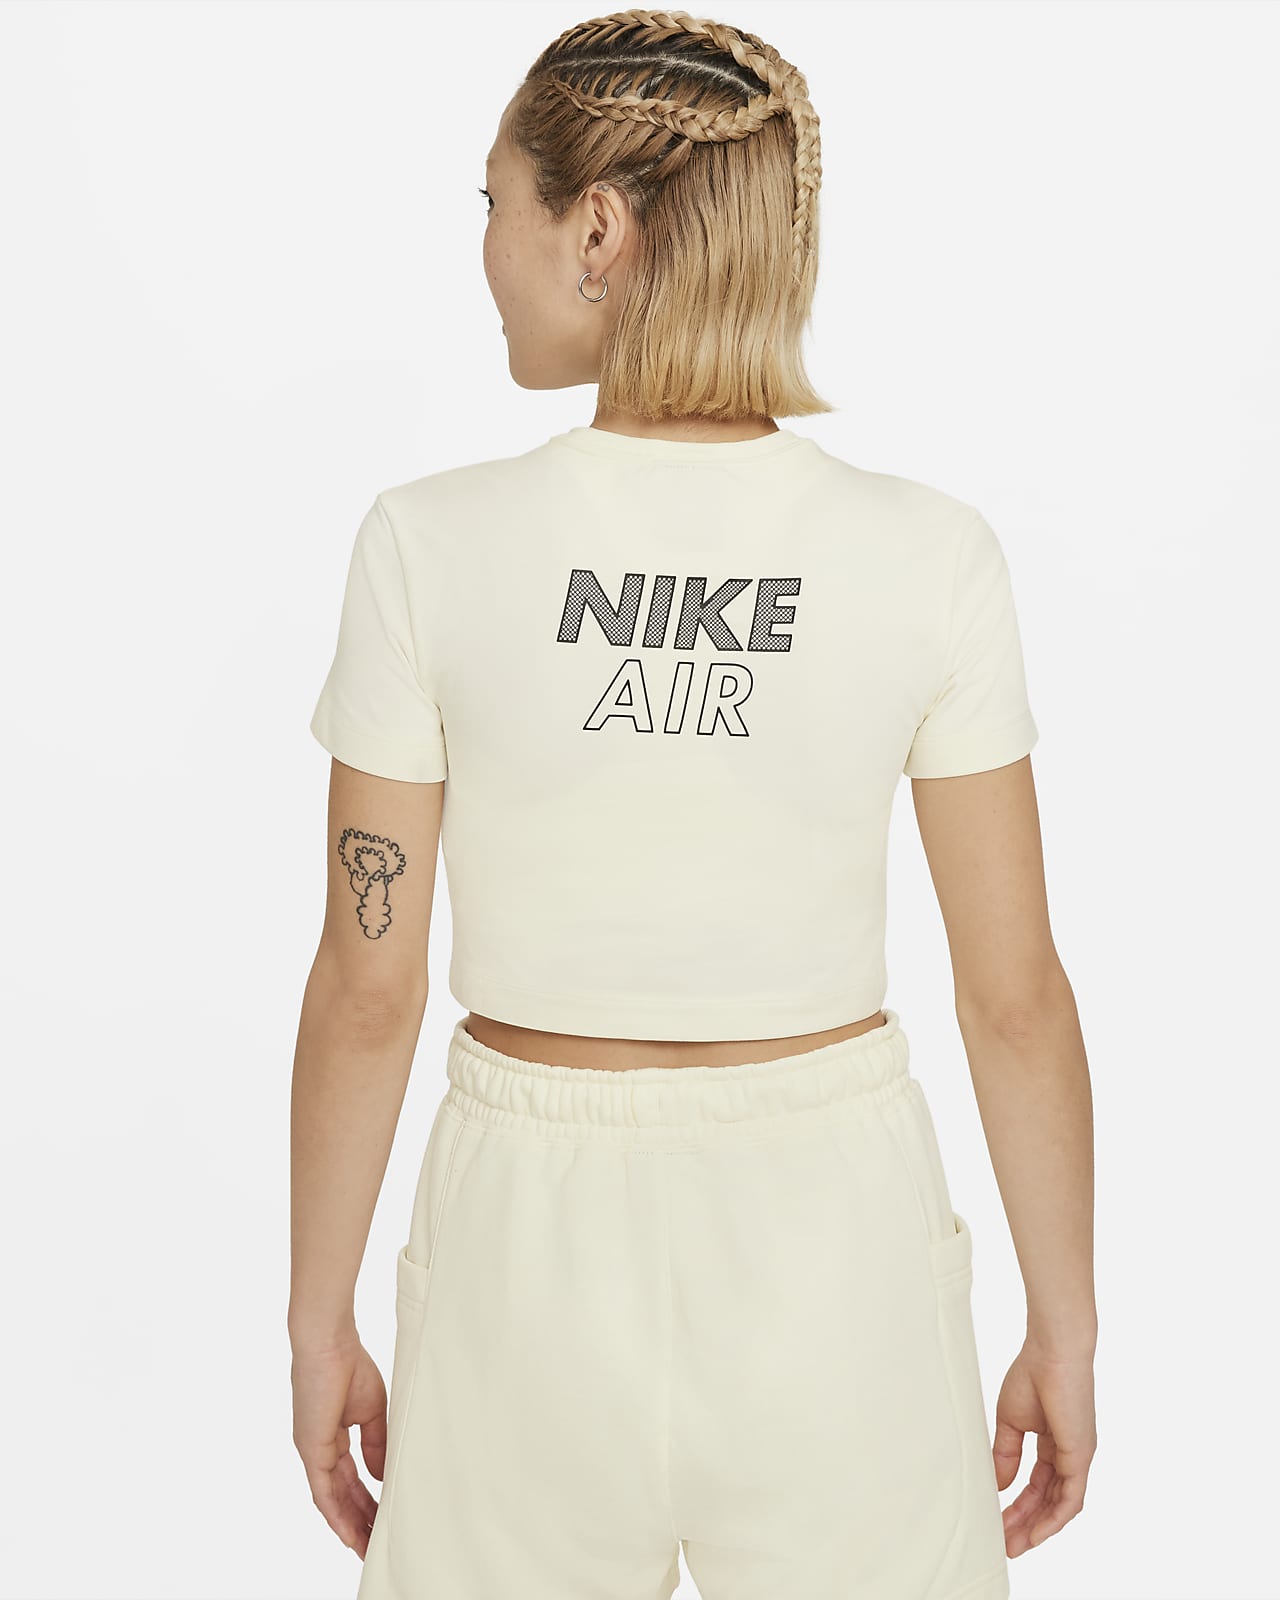 nike air women's short sleeve top